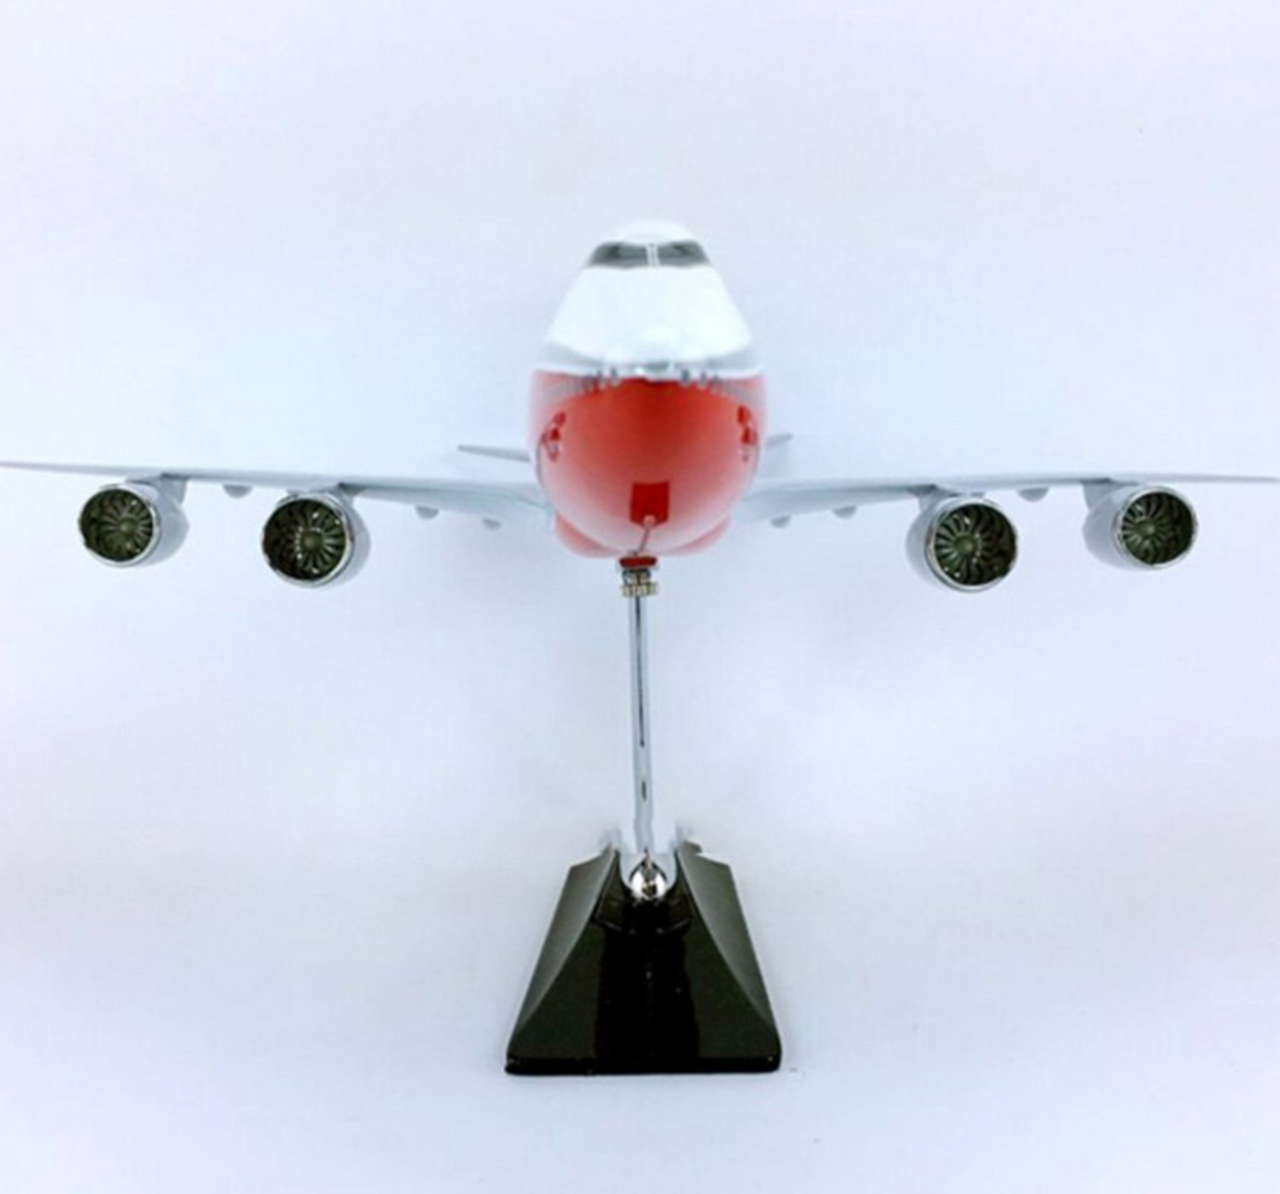 Boeing 747-800 Intercontinental Airplane Model (Handmade Special Edition 45CM)